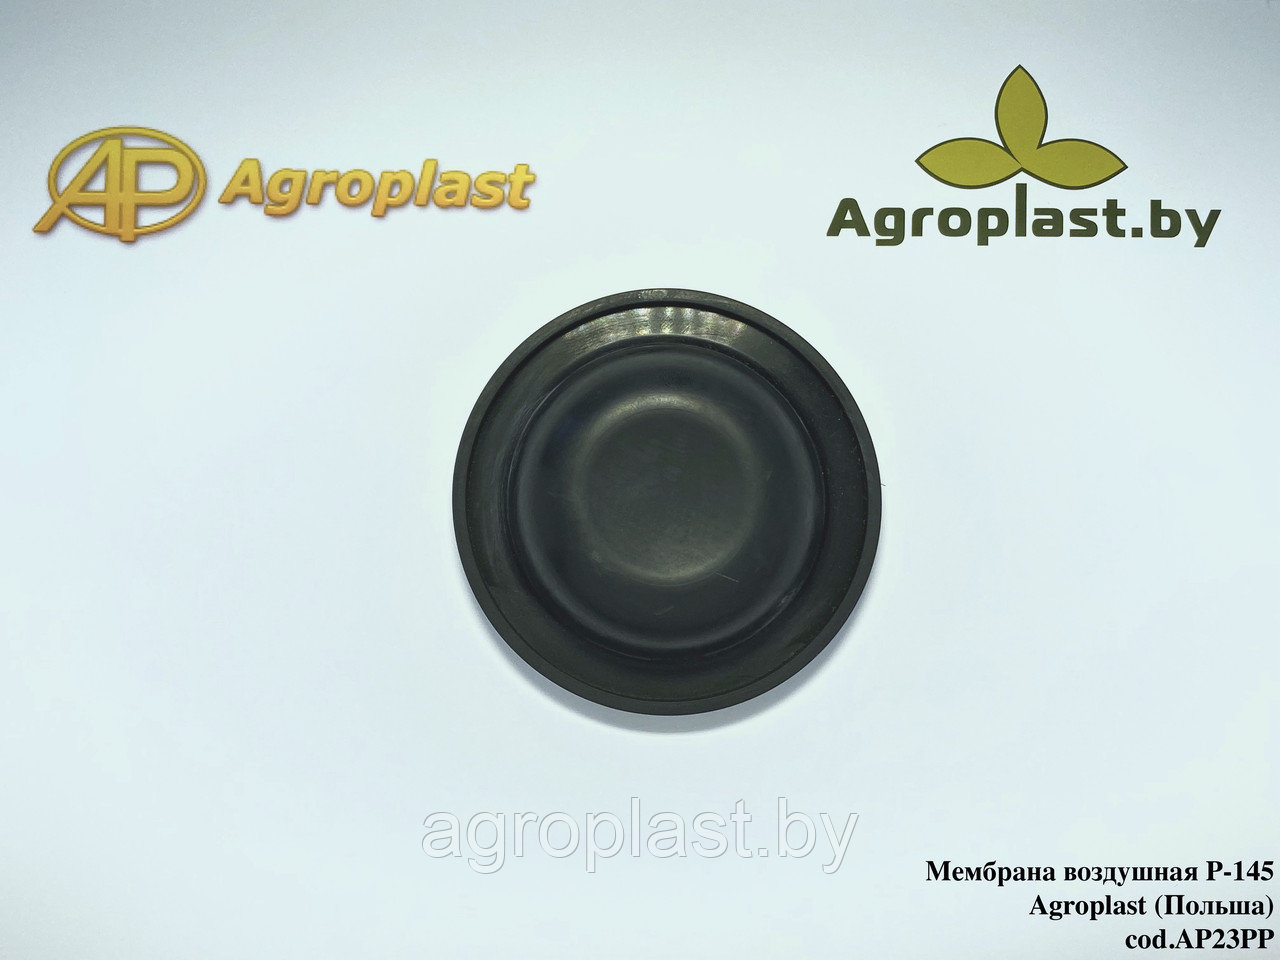 Мембрана воздушная насоса Agroplast P-145, P-110D, cod.AP23PP